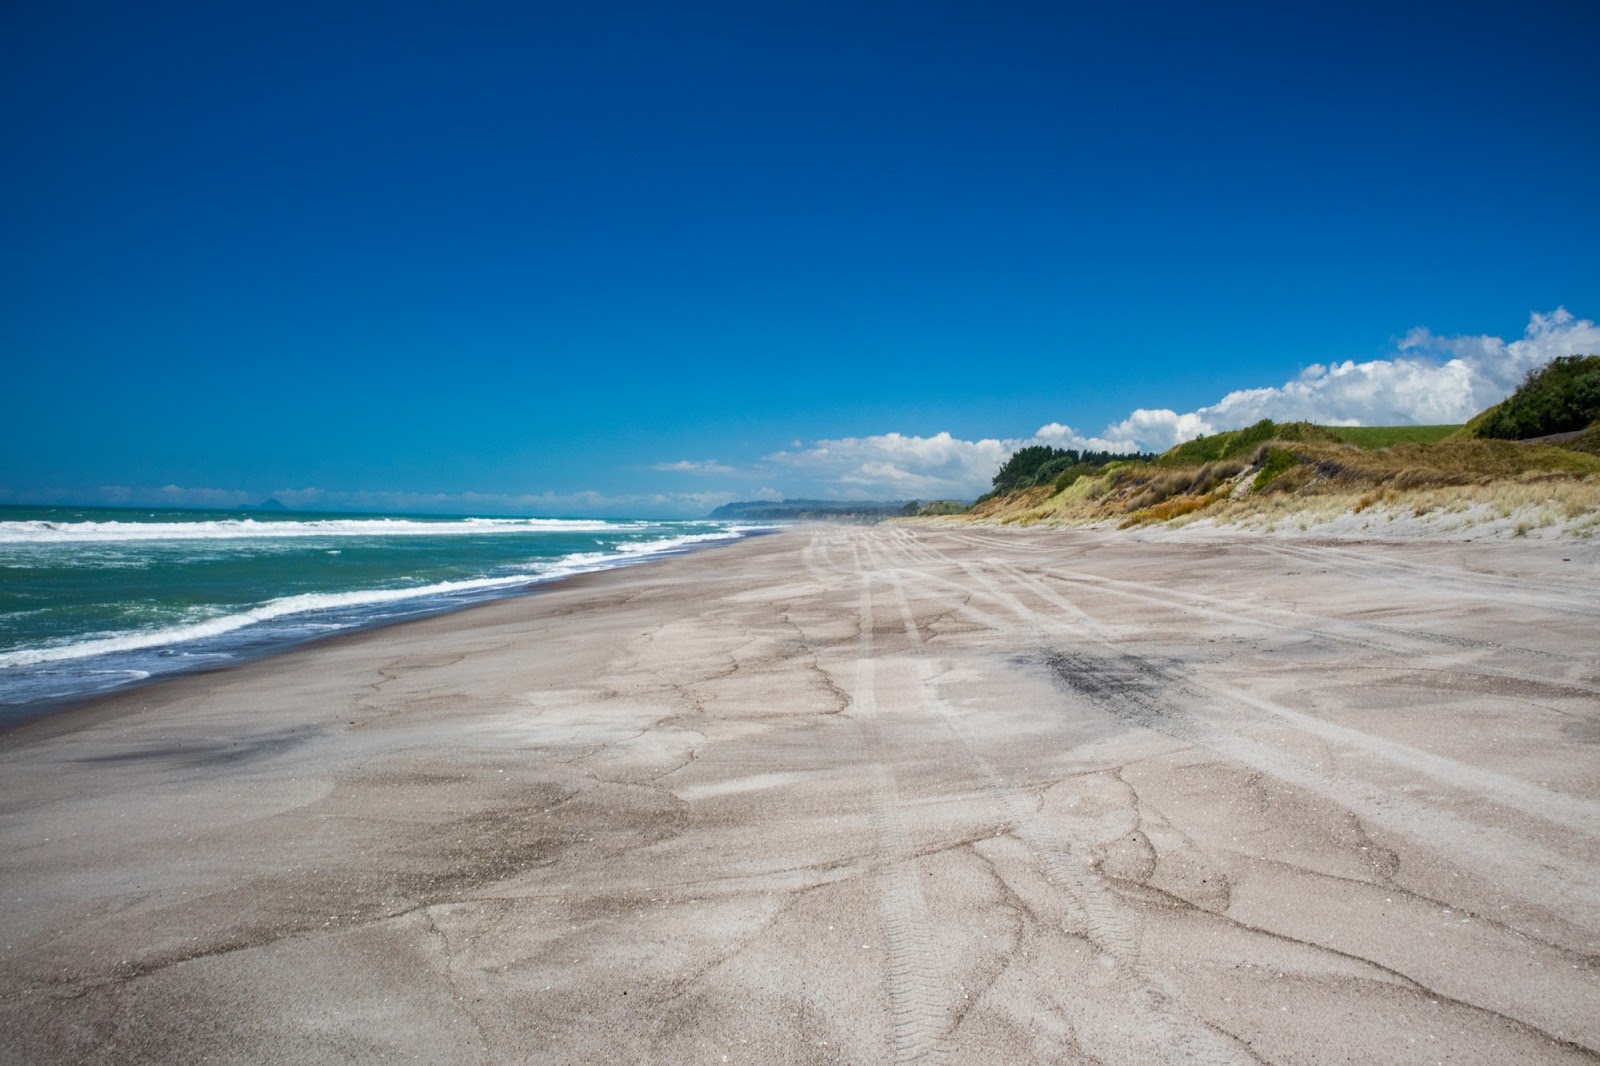 Foto av Otamarakau Beach Access med ljus sand yta